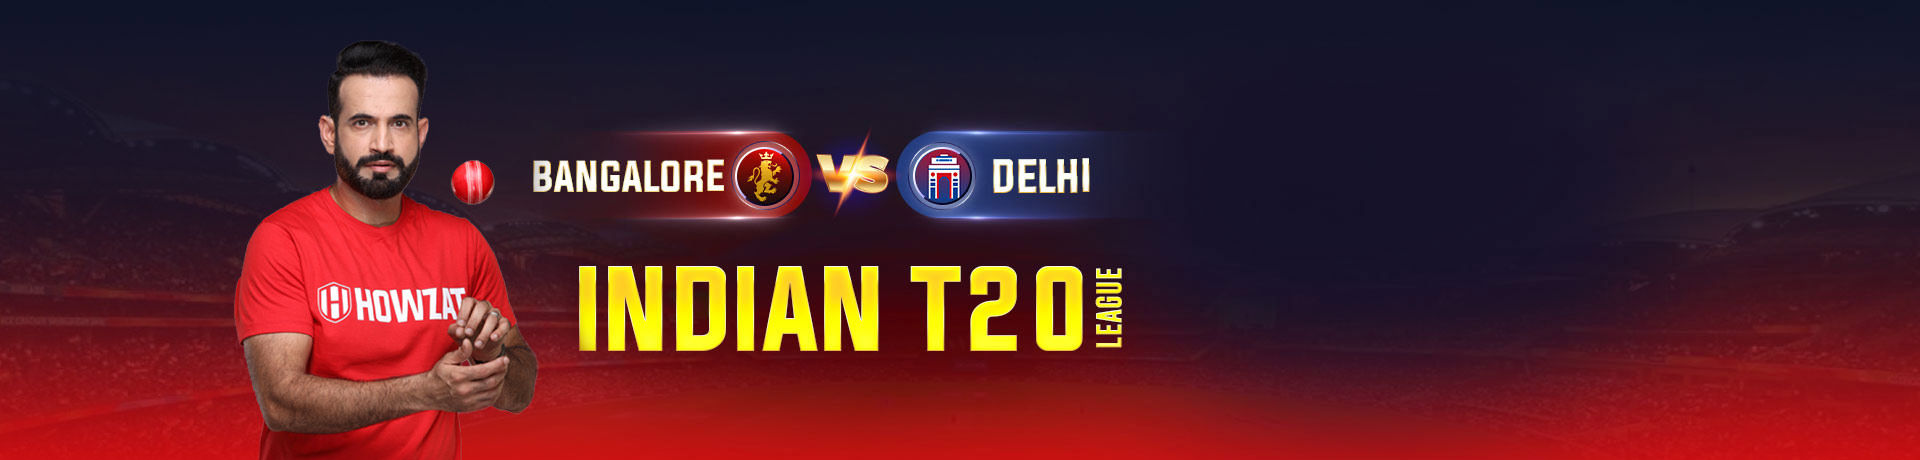 Bangalore vs Delhi Indian T20 League